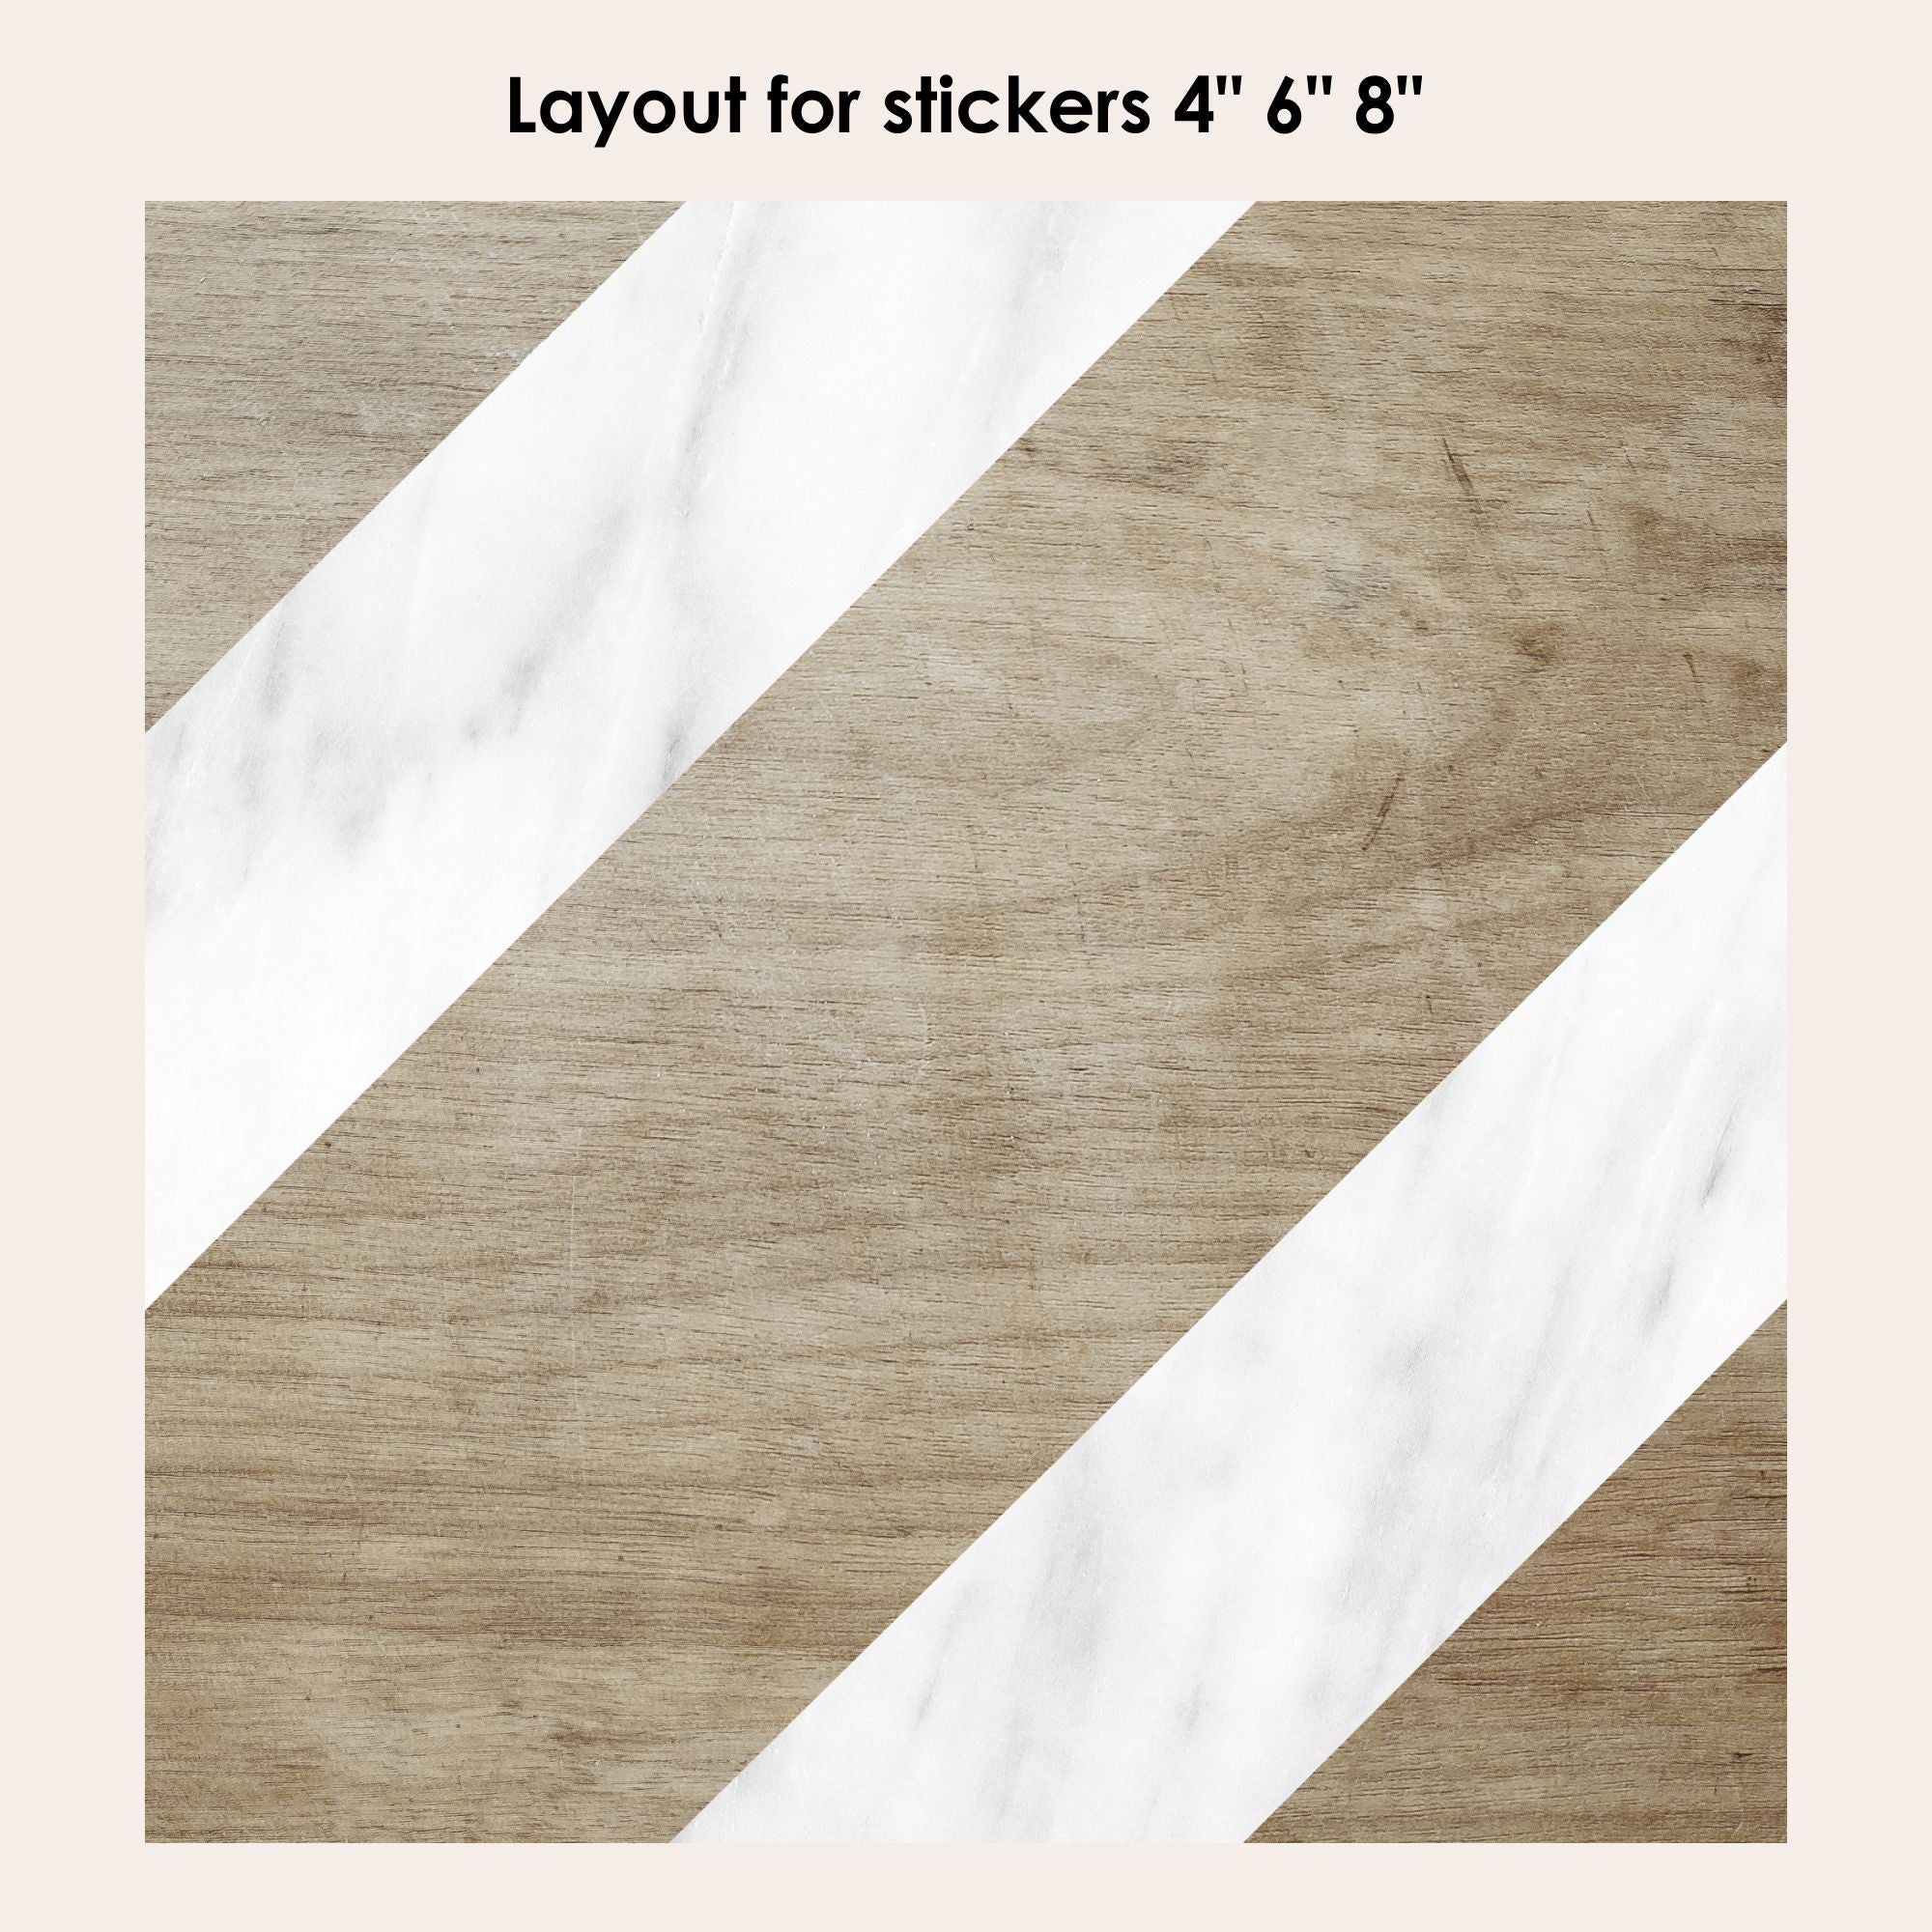 Salon in Wood Vinyl Tile Sticker